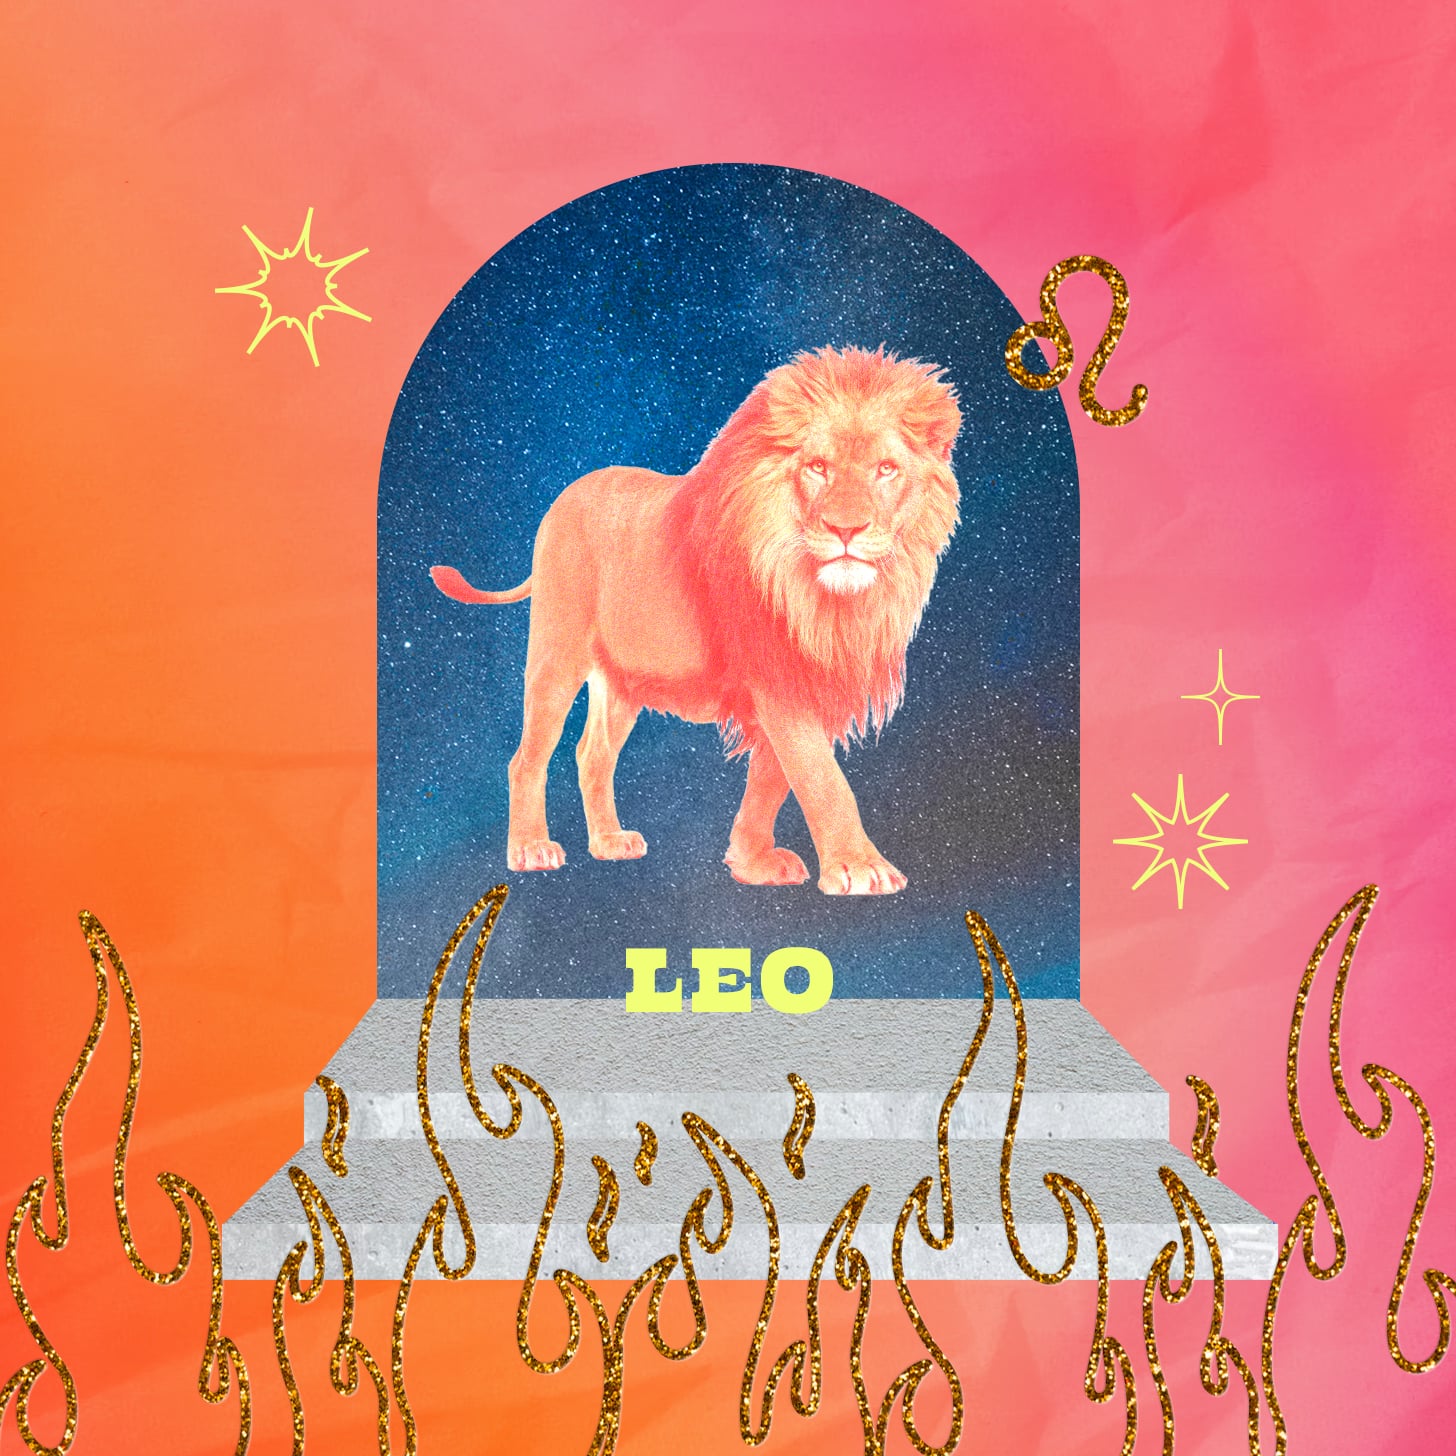 Leo weekly horoscope for Nov. 27, 2022